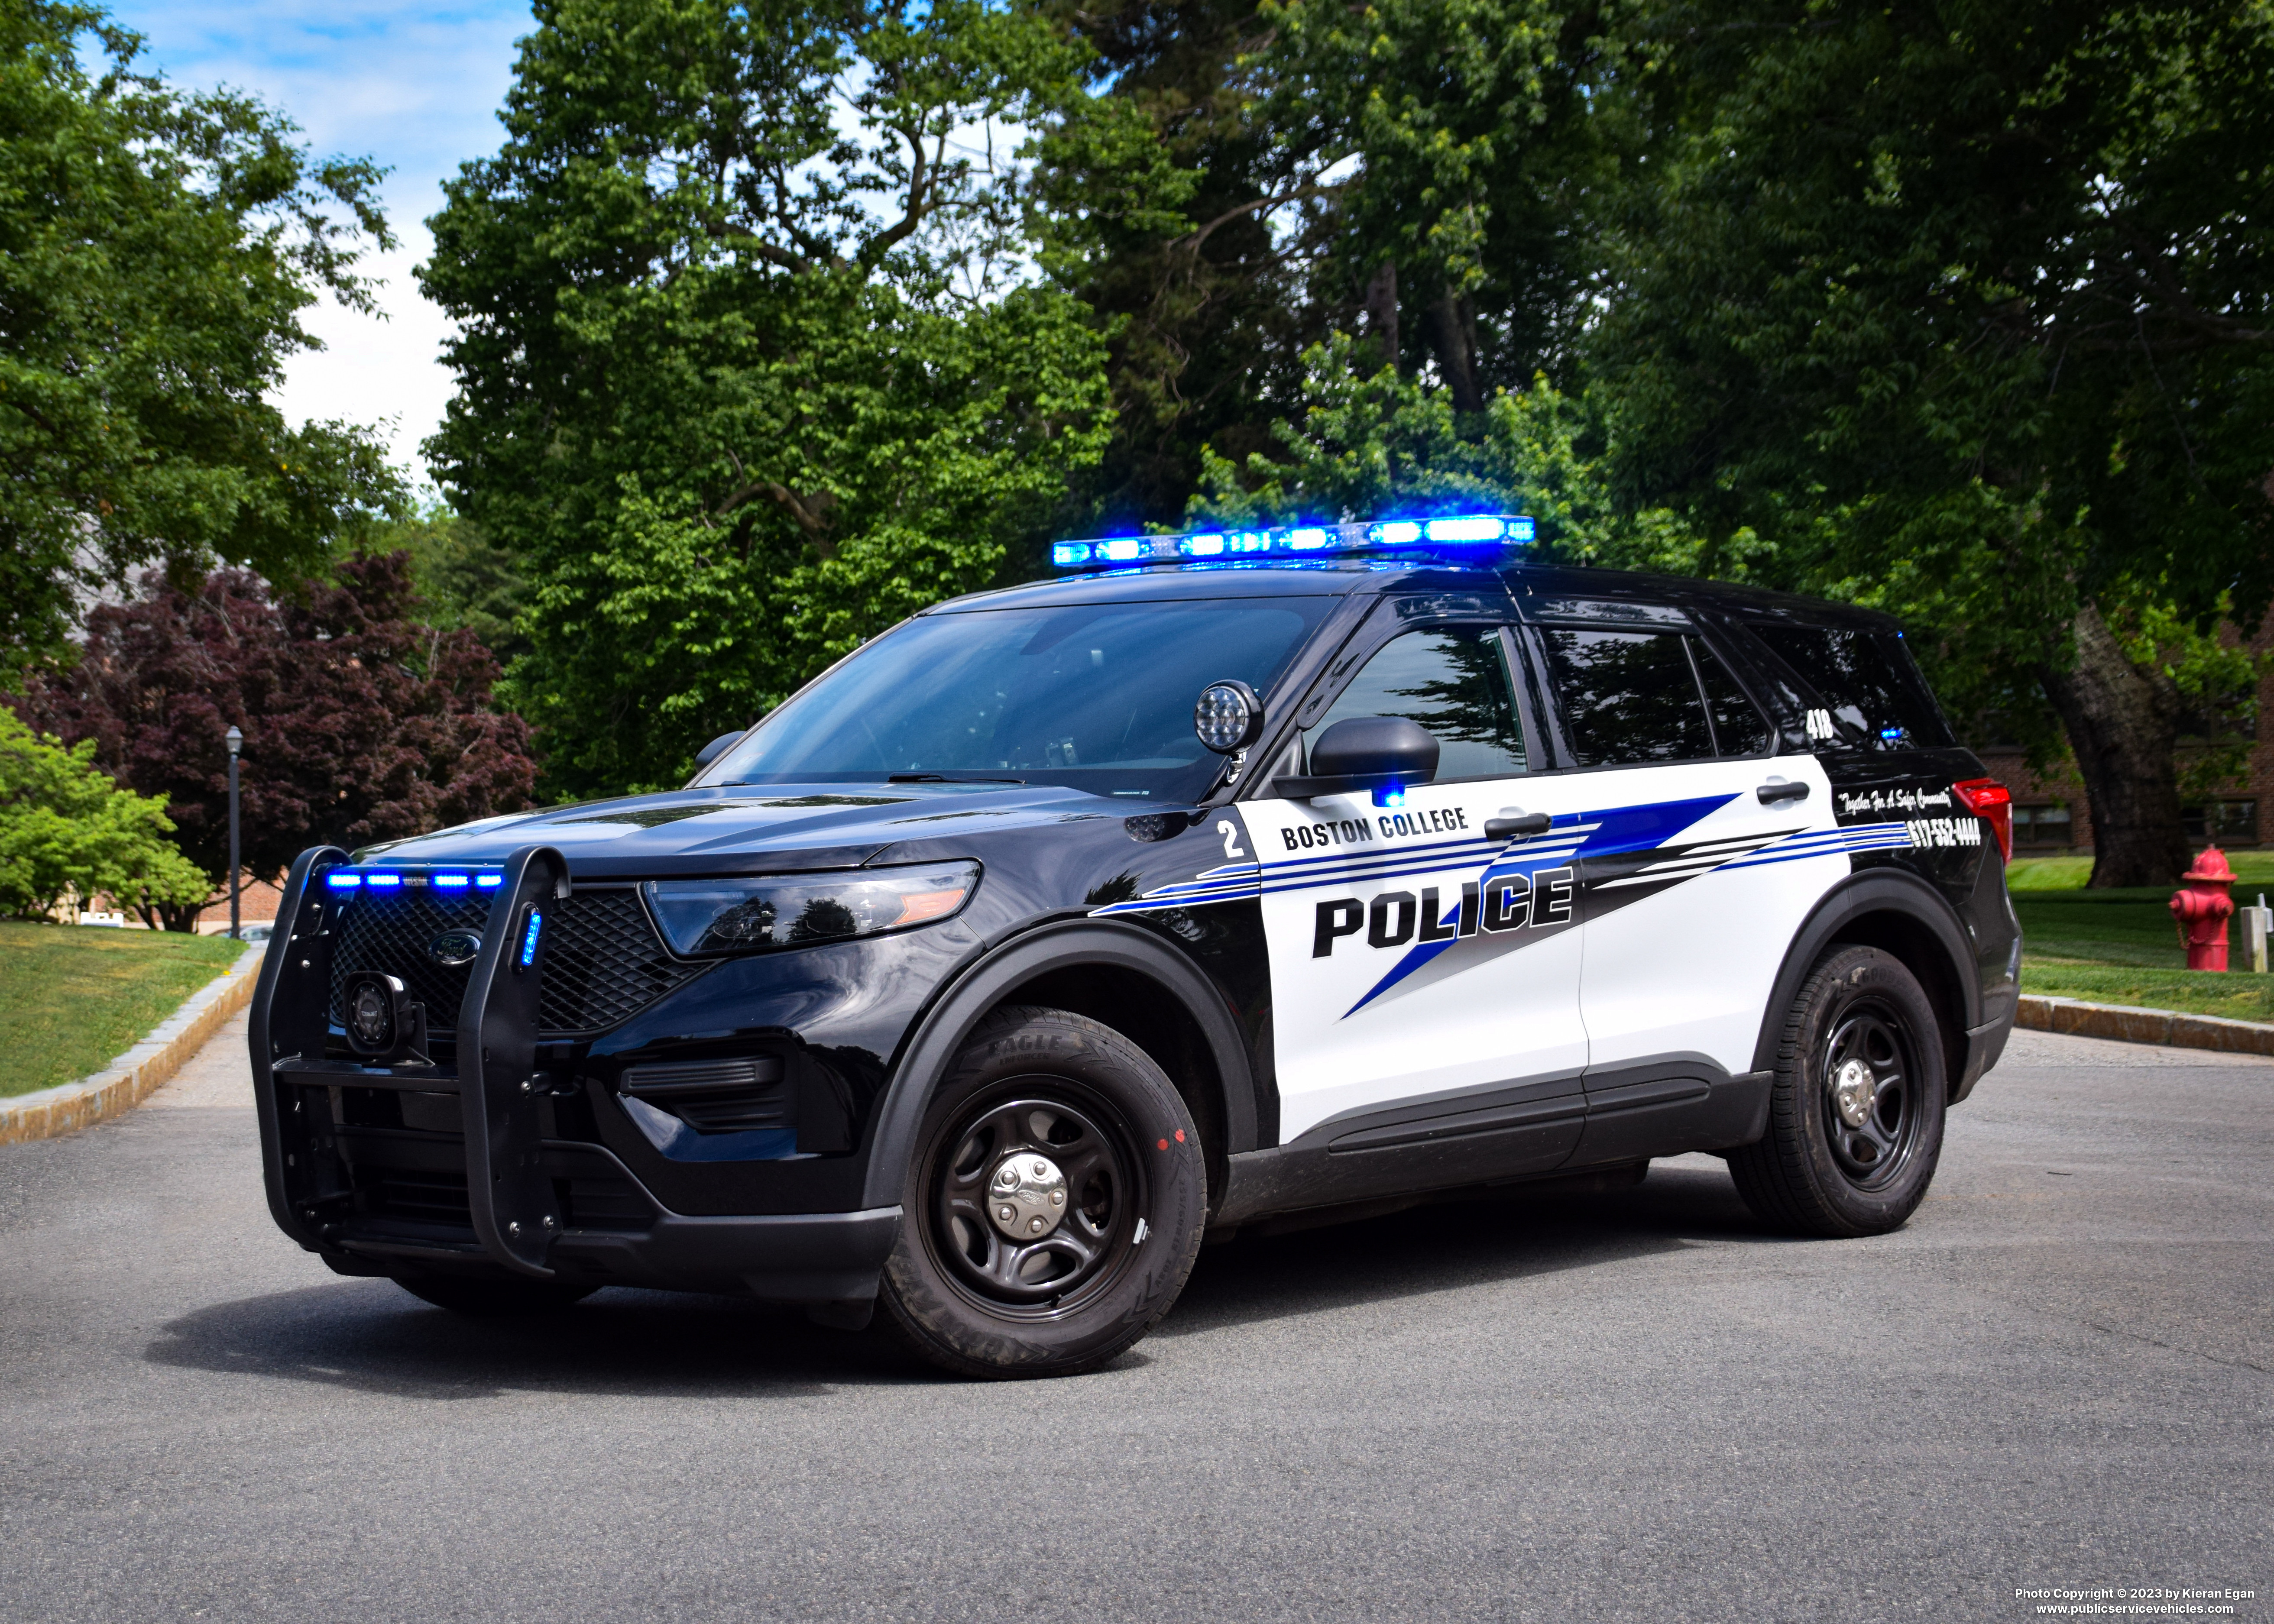 A photo  of Boston College Police
            Cruiser 418, a 2021 Ford Police Interceptor Utility             taken by Kieran Egan